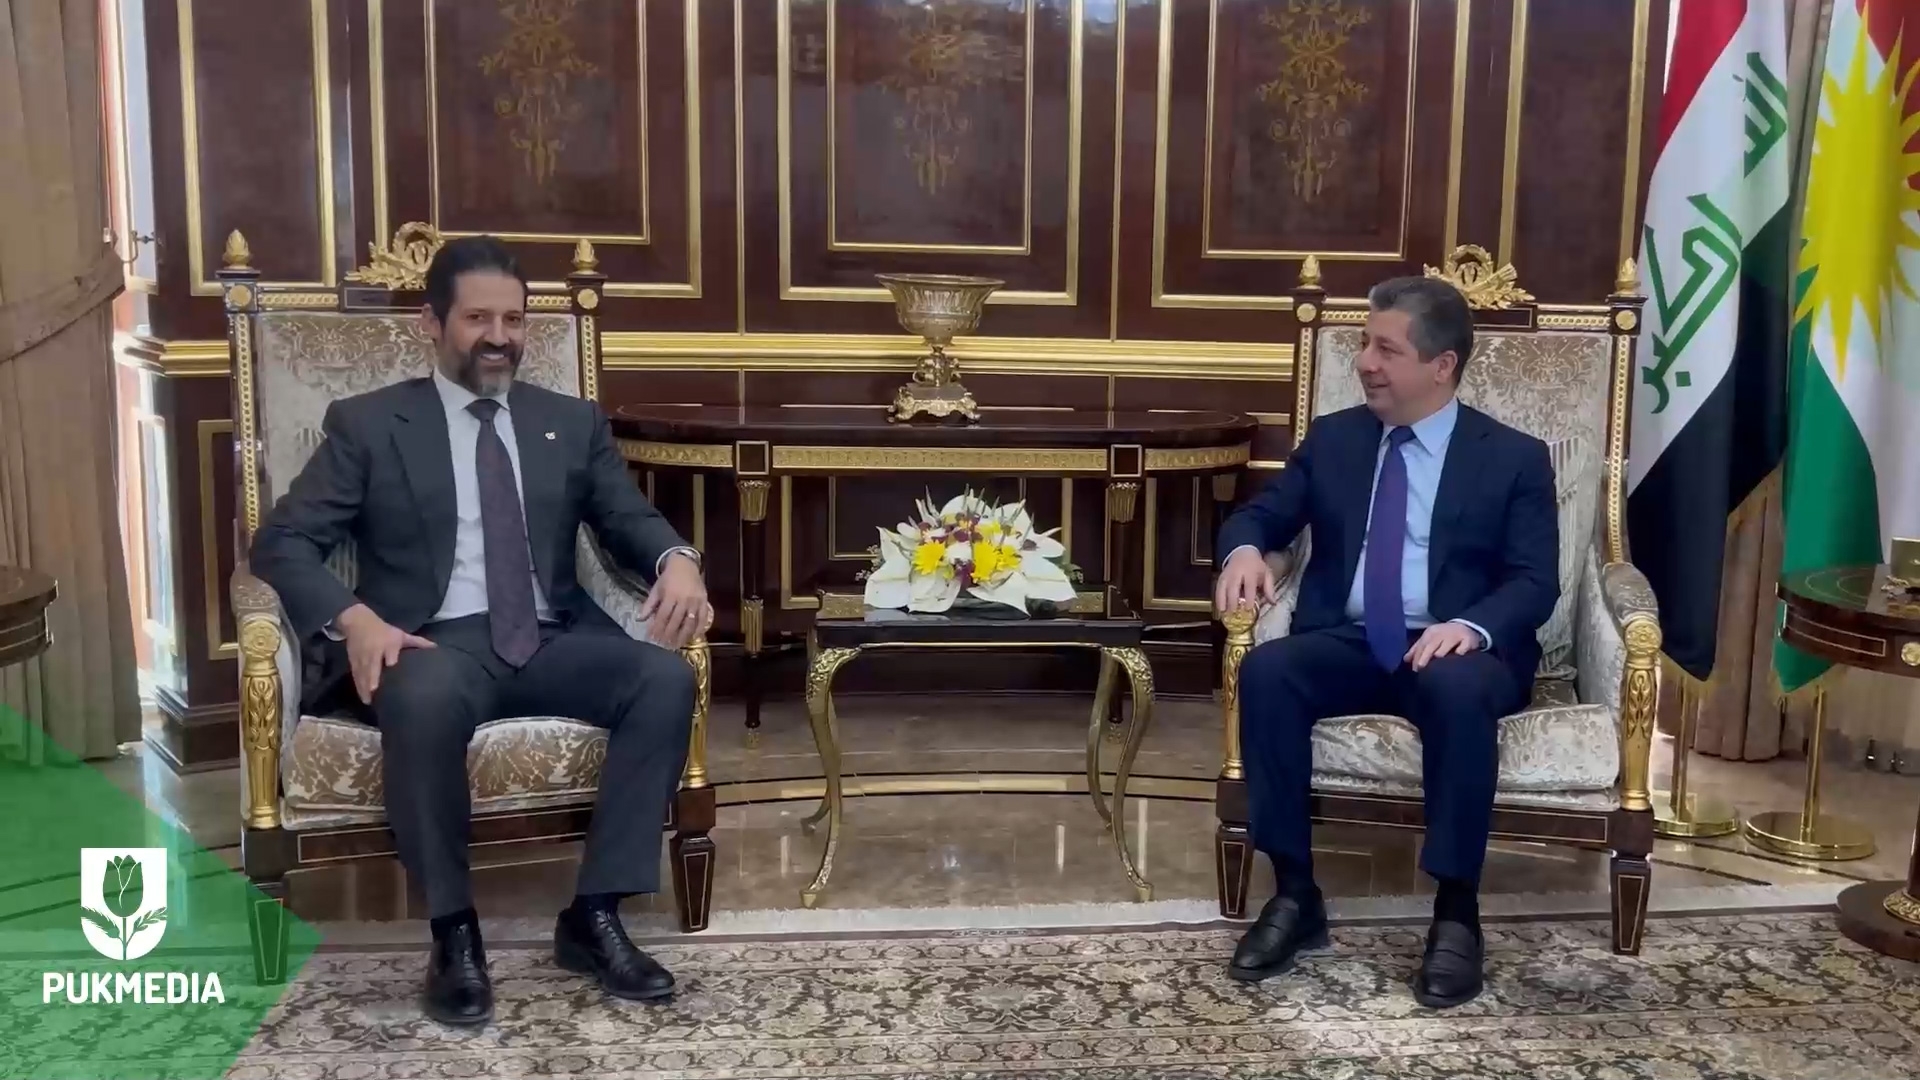  PM and Deputy PM of the Kurdistan Region.